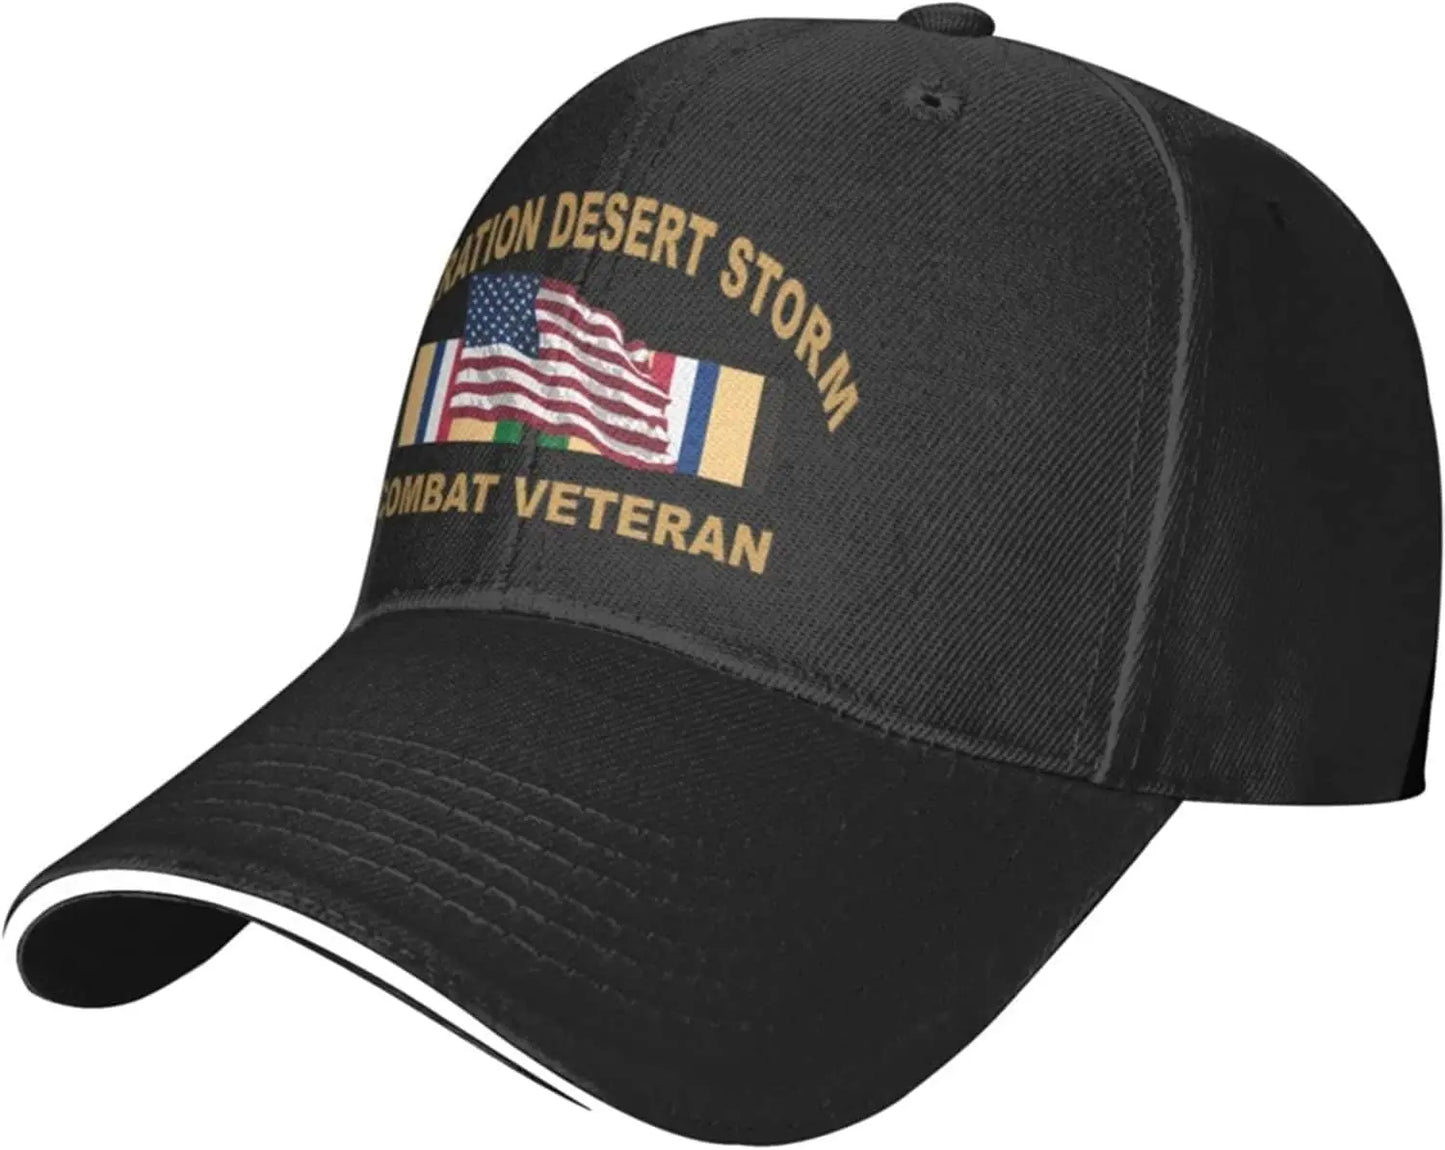 Operation Desert Storm Combat Veteran Hat Adjustable Baseball Hat for Men Women Cap Casquette Hat